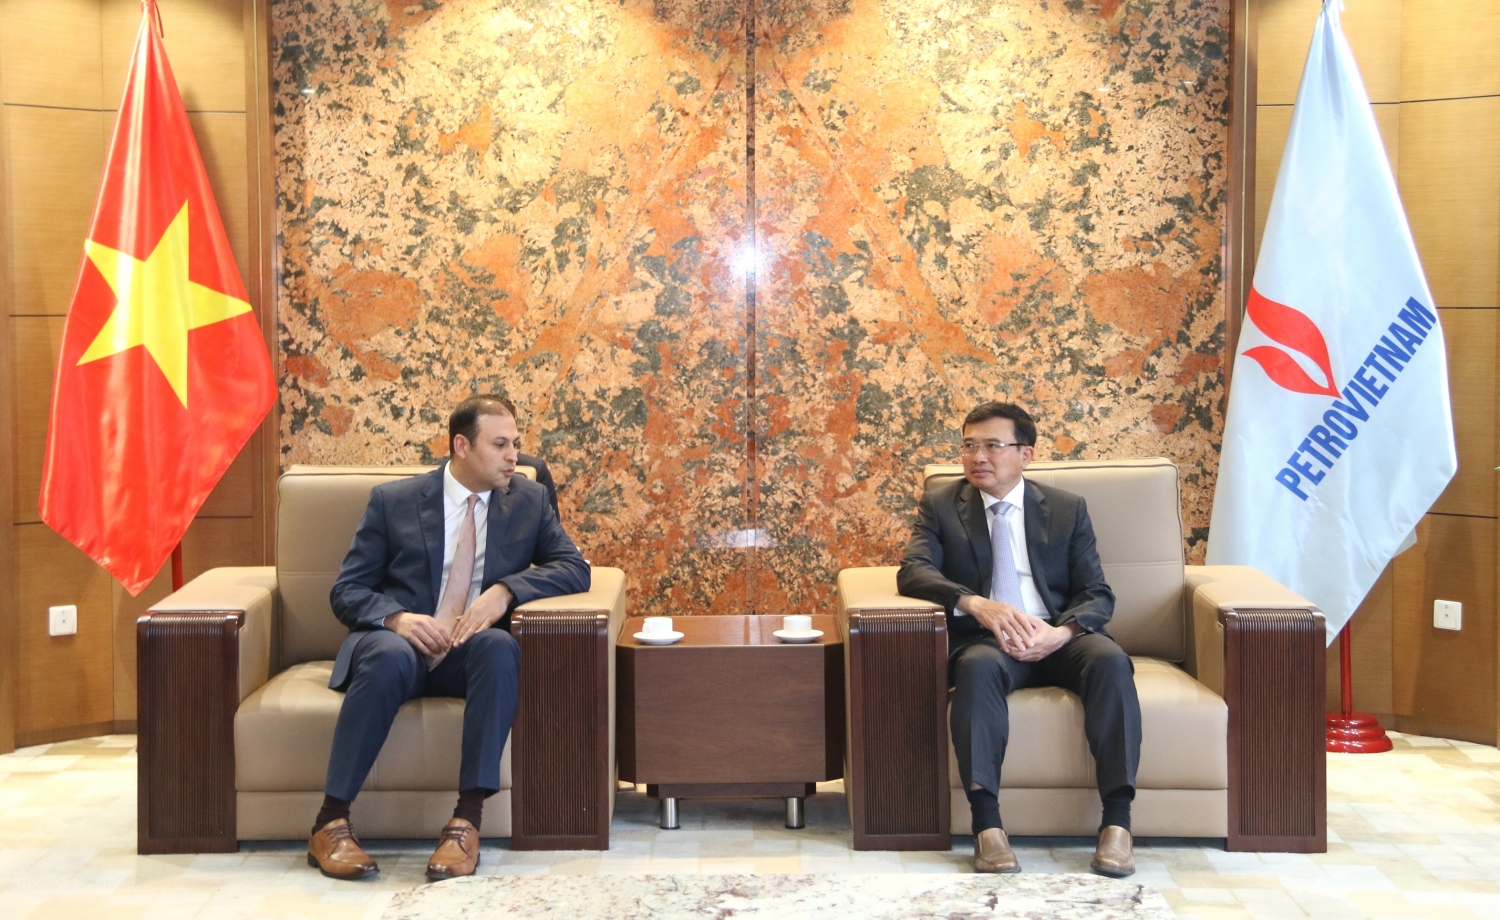 Petrovietnam Chairman of the Board of Directors Hoang Quoc Vuong receives Ambassador of the Kingdom of Saudi Arabia to Vietnam